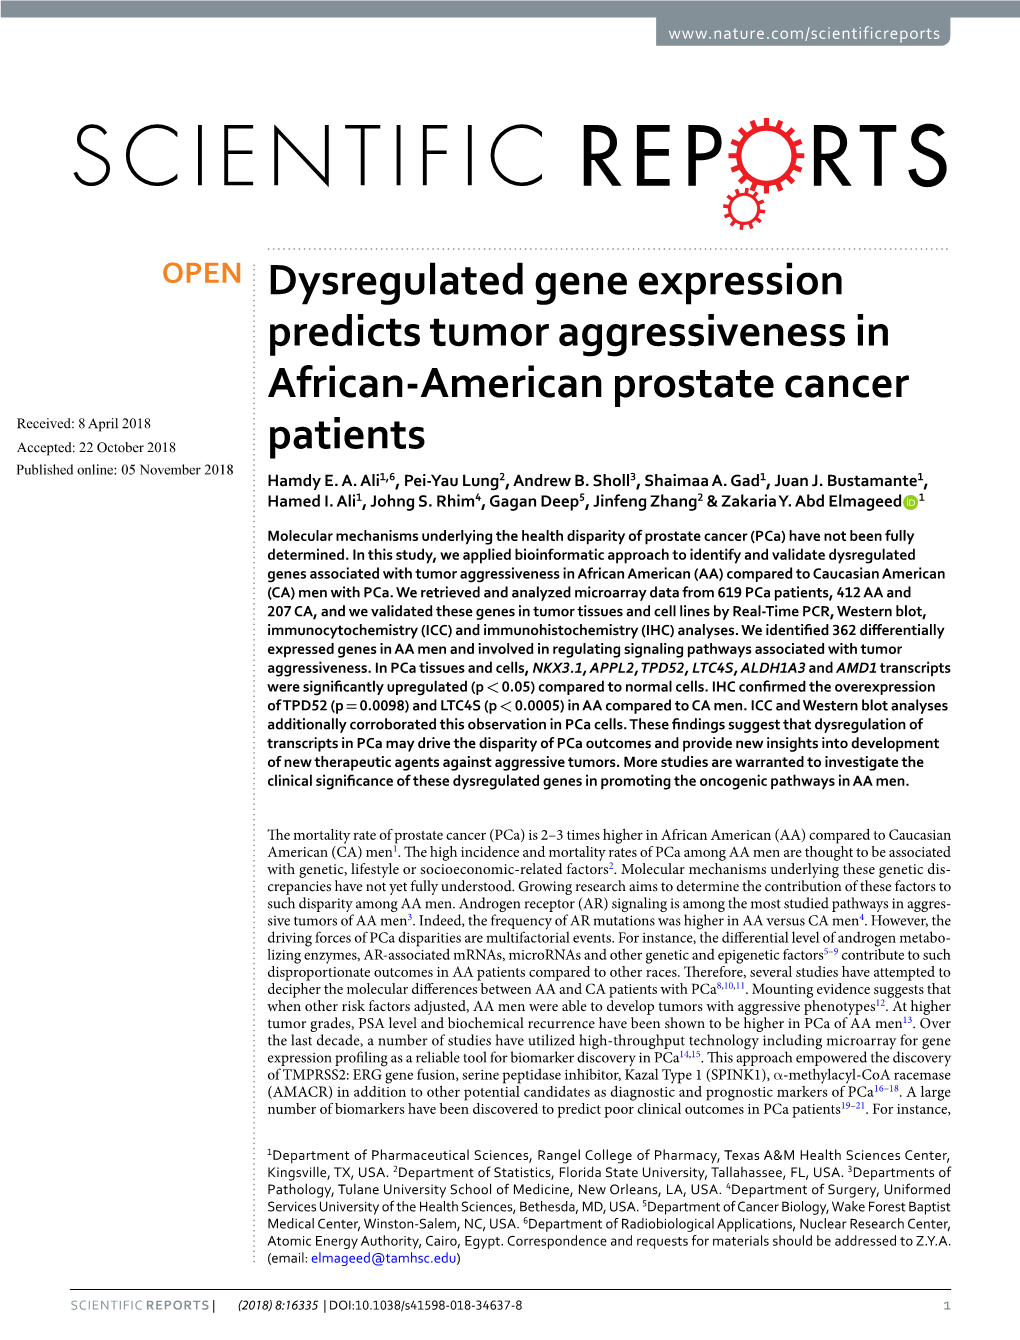 Dysregulated Gene Expression Predicts Tumor Aggressiveness In